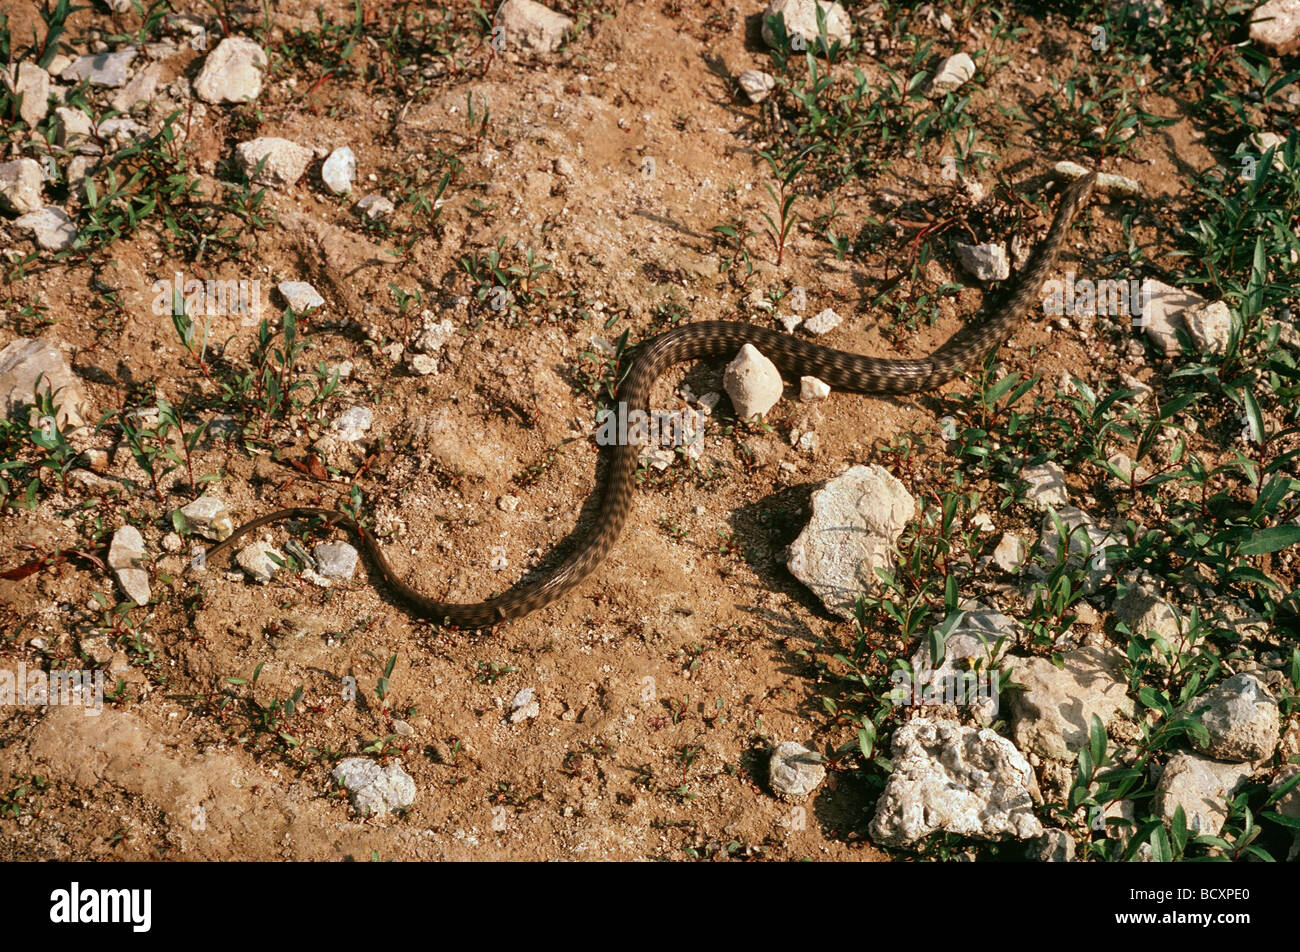 dice snake / Natrix tessellata Stock Photo